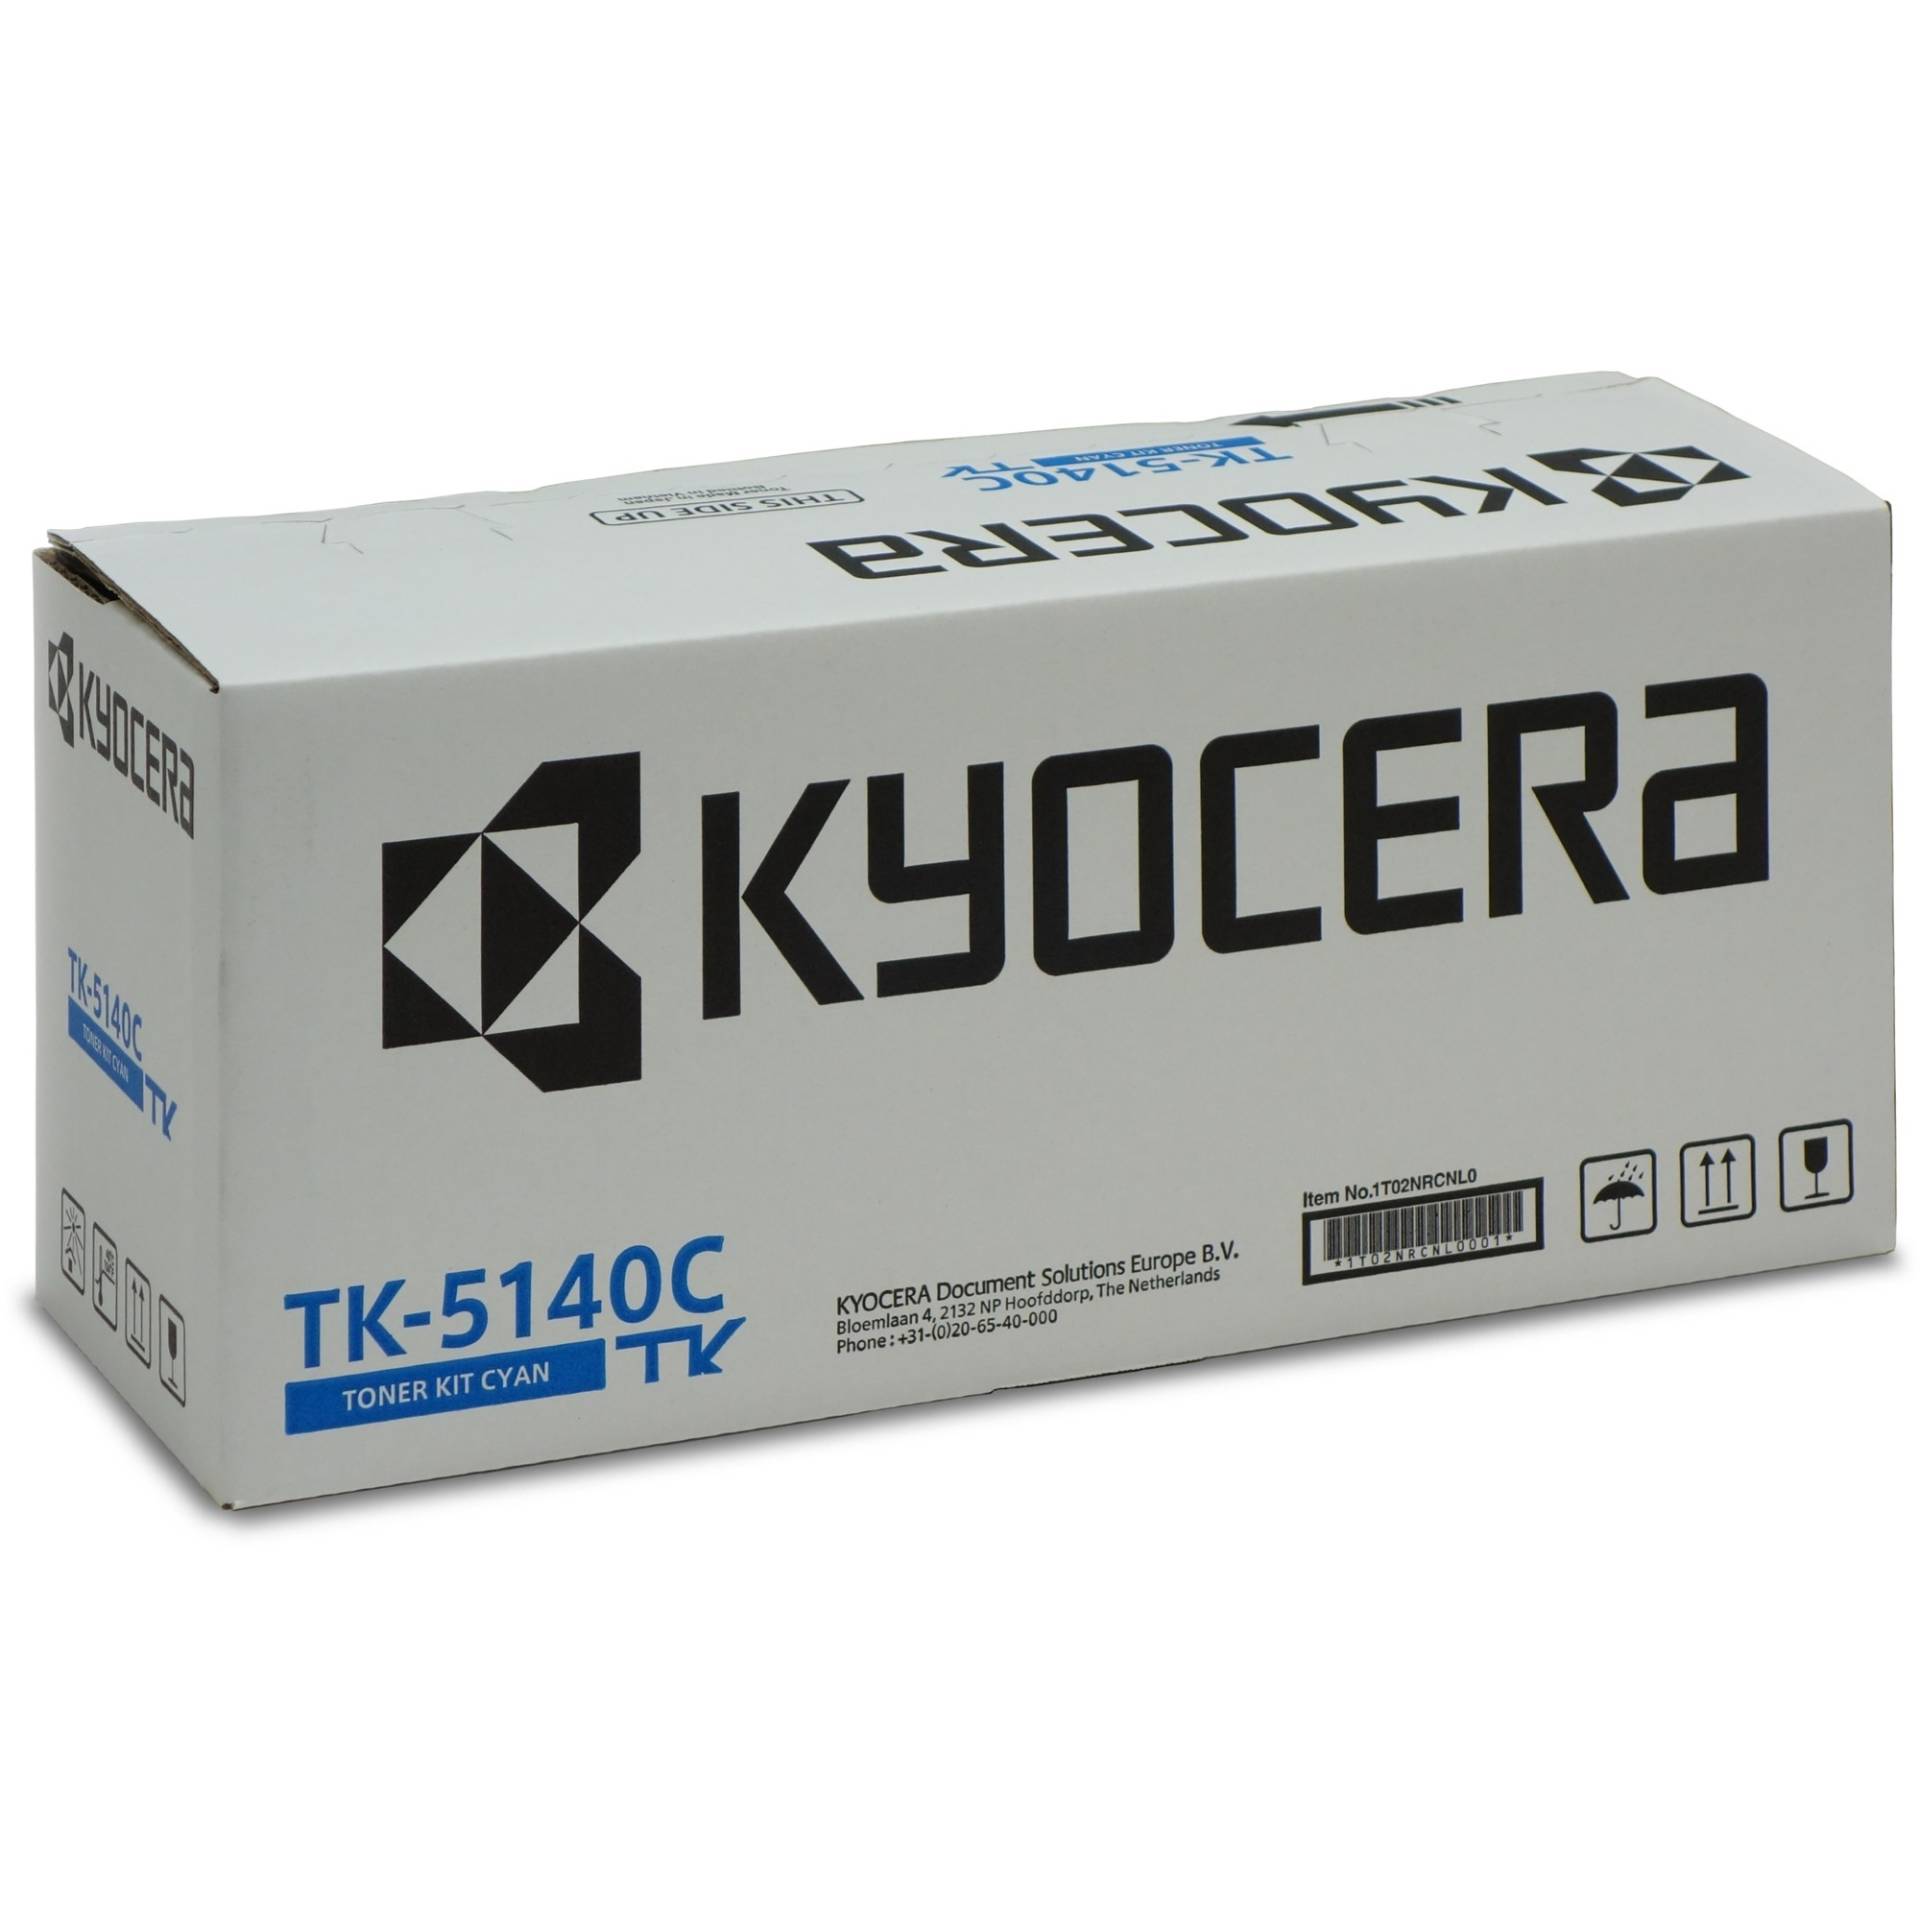 Toner cyan TK-5140C von Kyocera